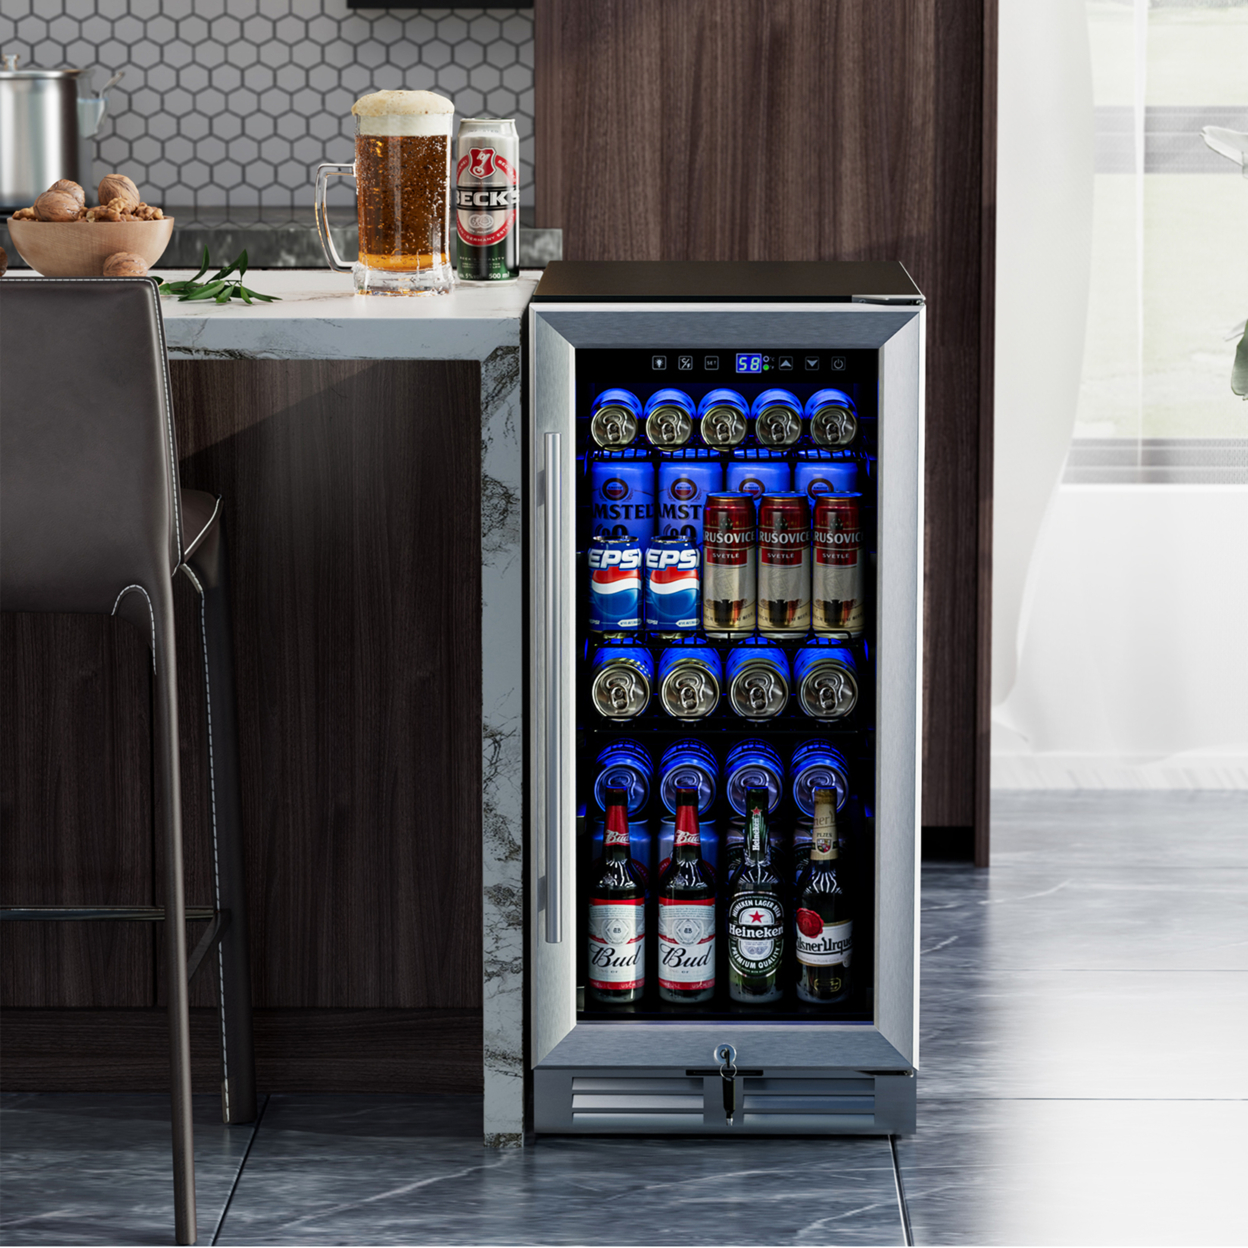 15 Inch Beverage Cooler Refrigerator 100 Can Built-in Freestanding Beverage